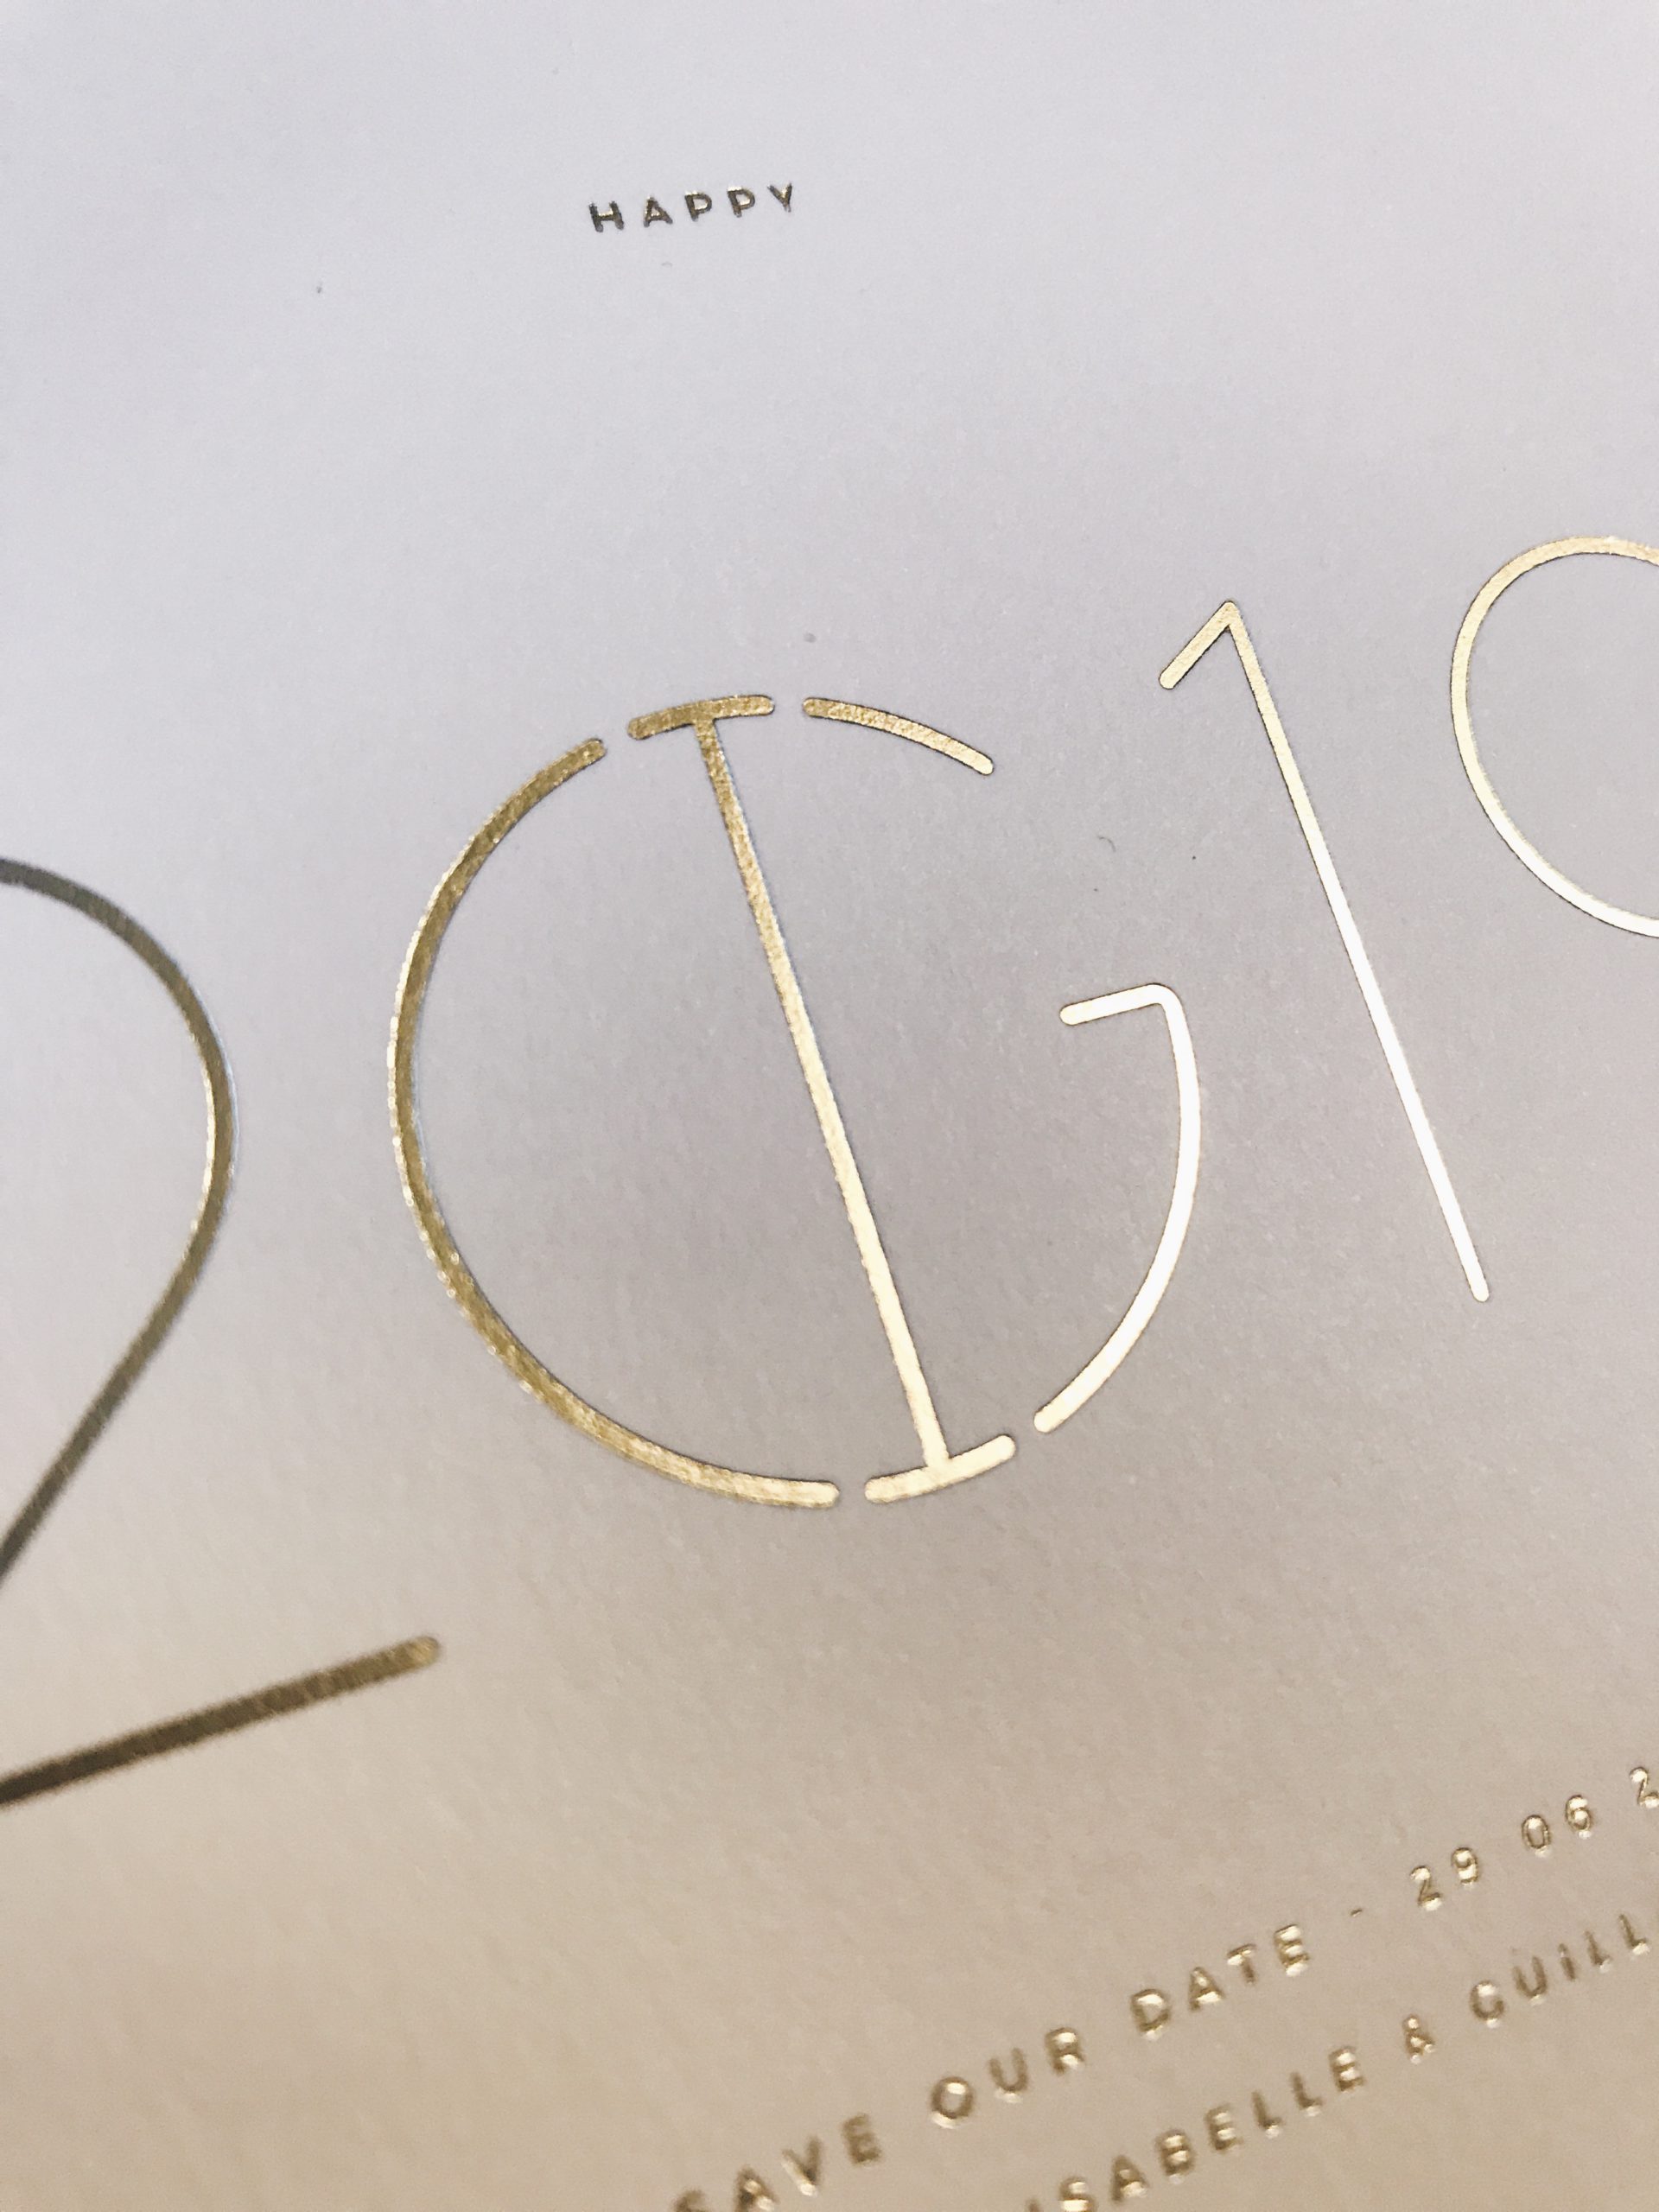 Huwelijksuitnodigingen wedding logo I&G letterpress goldfoil goudfolie foliedruk